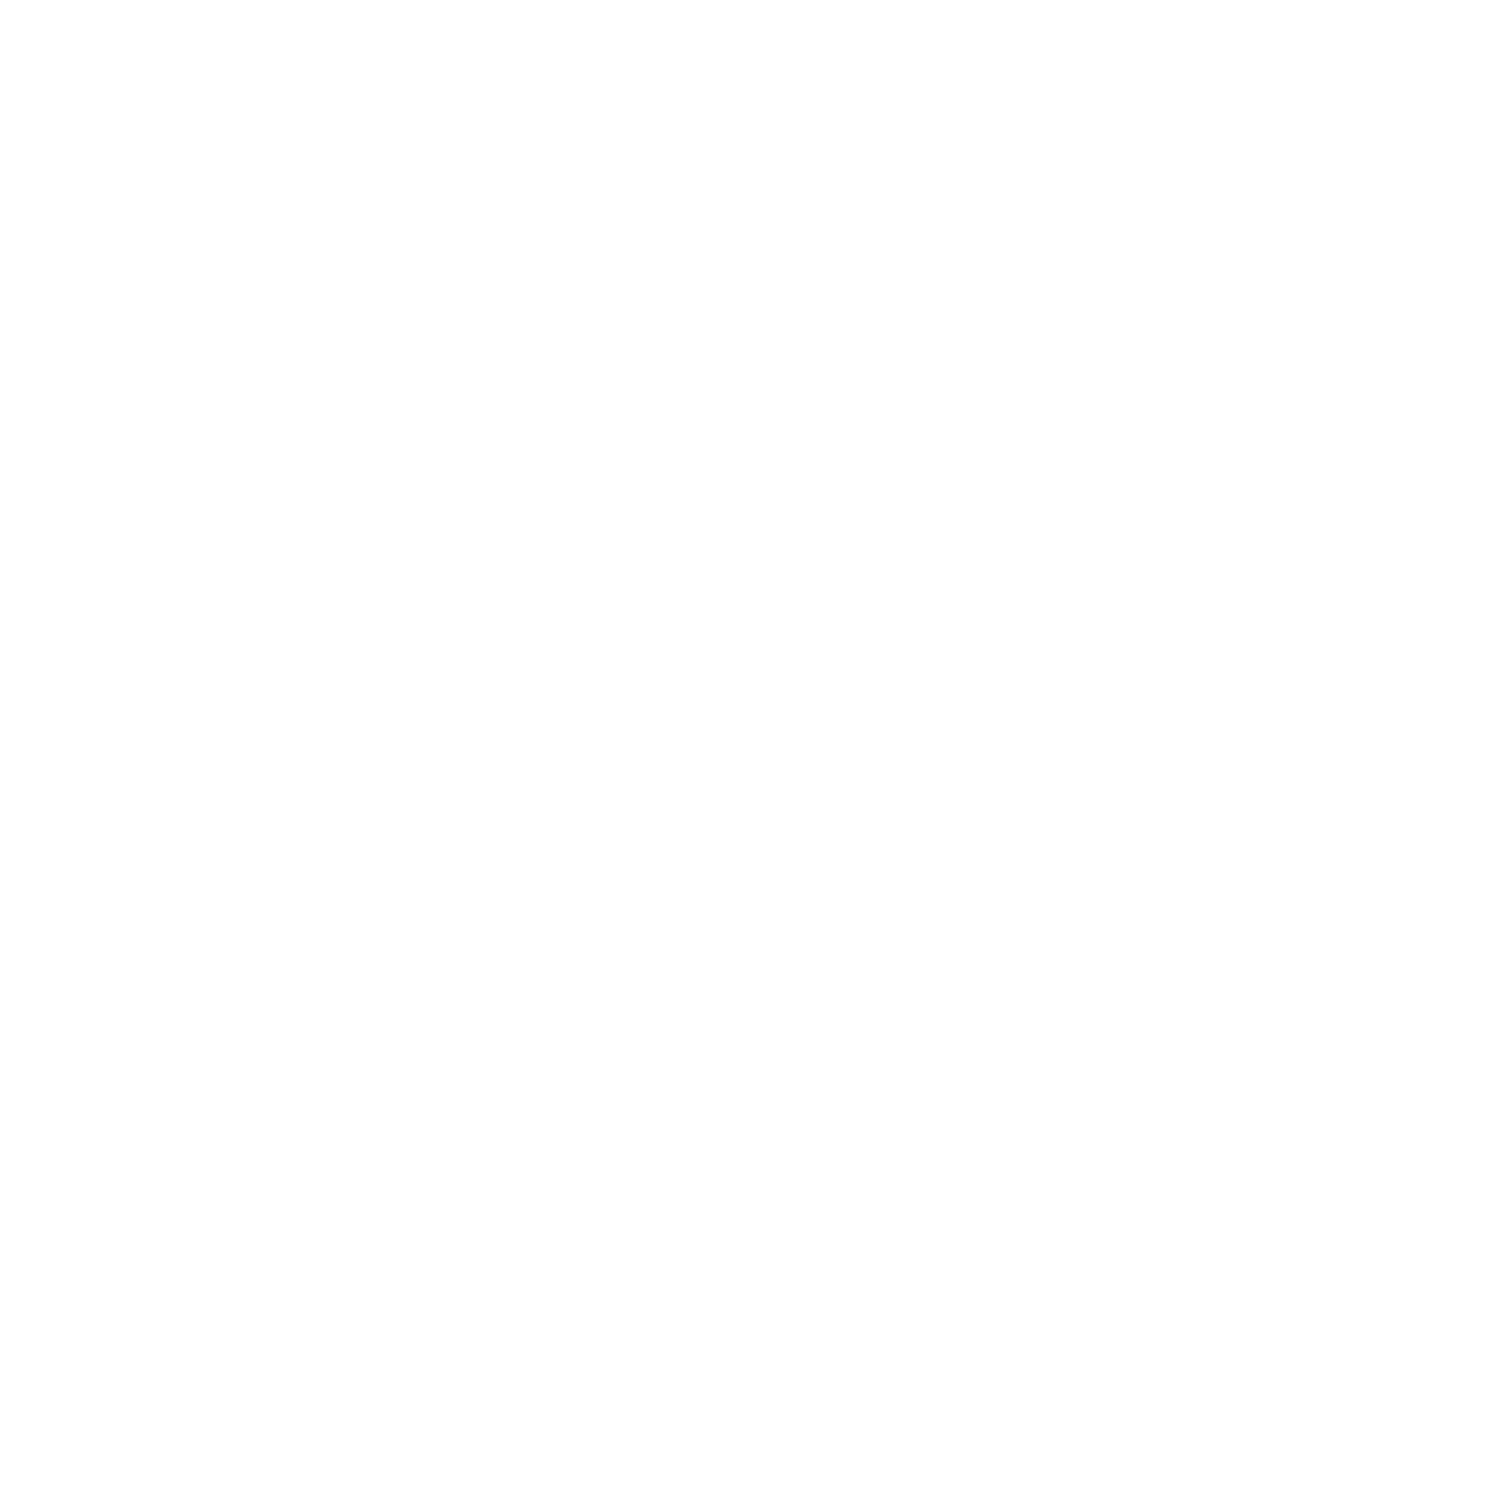 Project Hiu